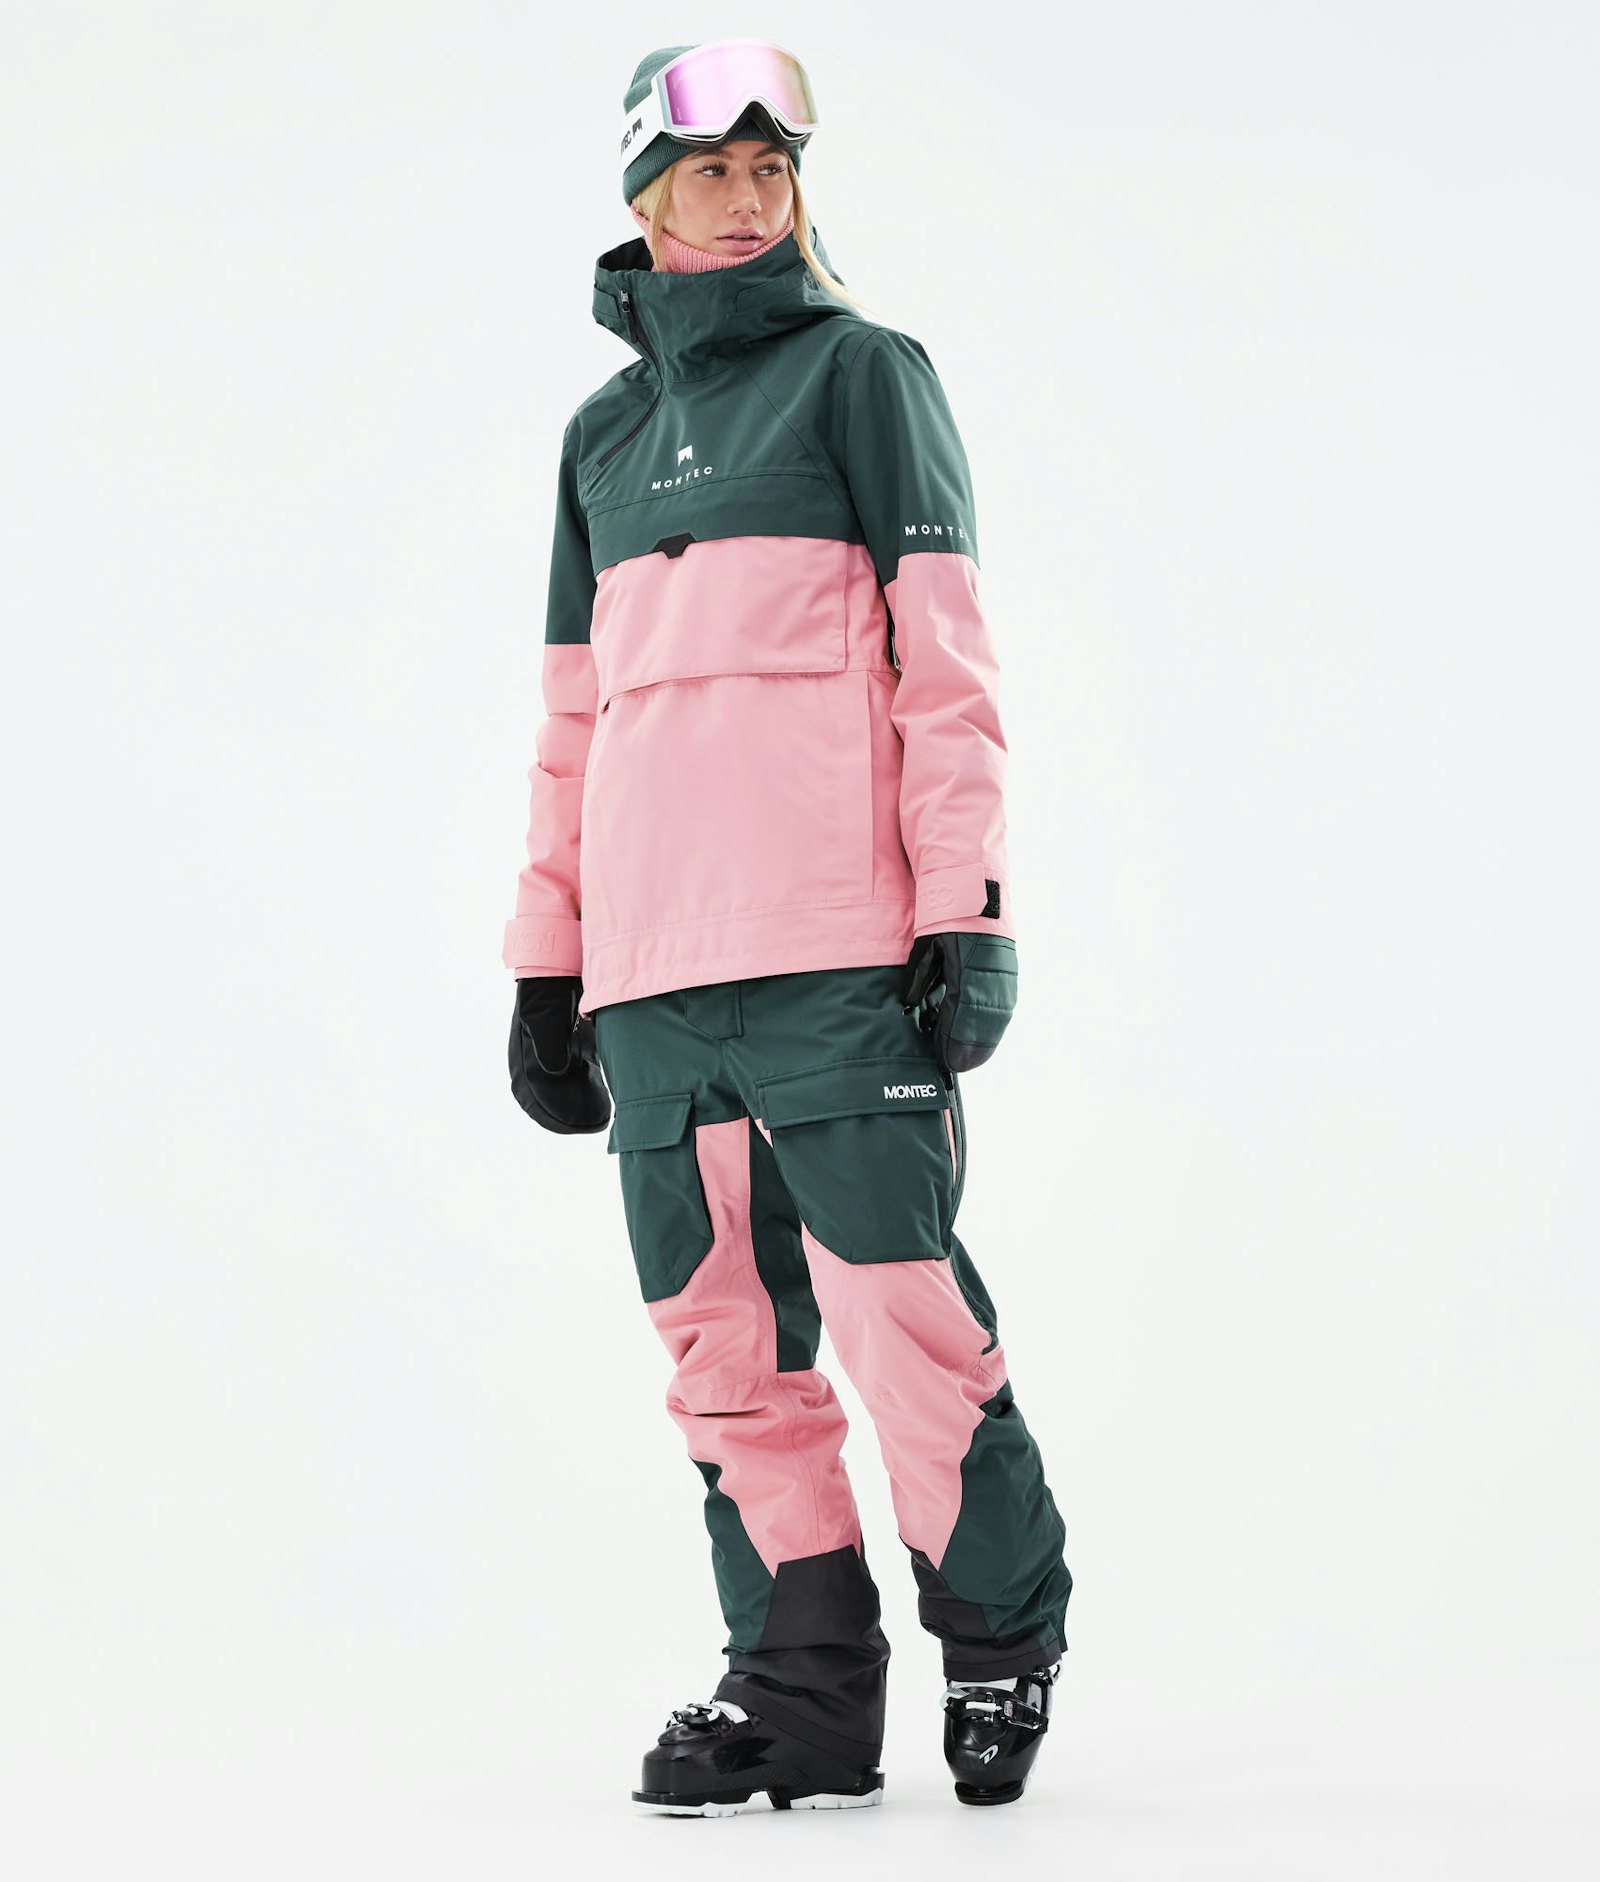 Dune W 2021 Ski Jacket Women Dark Atlantic/Pink